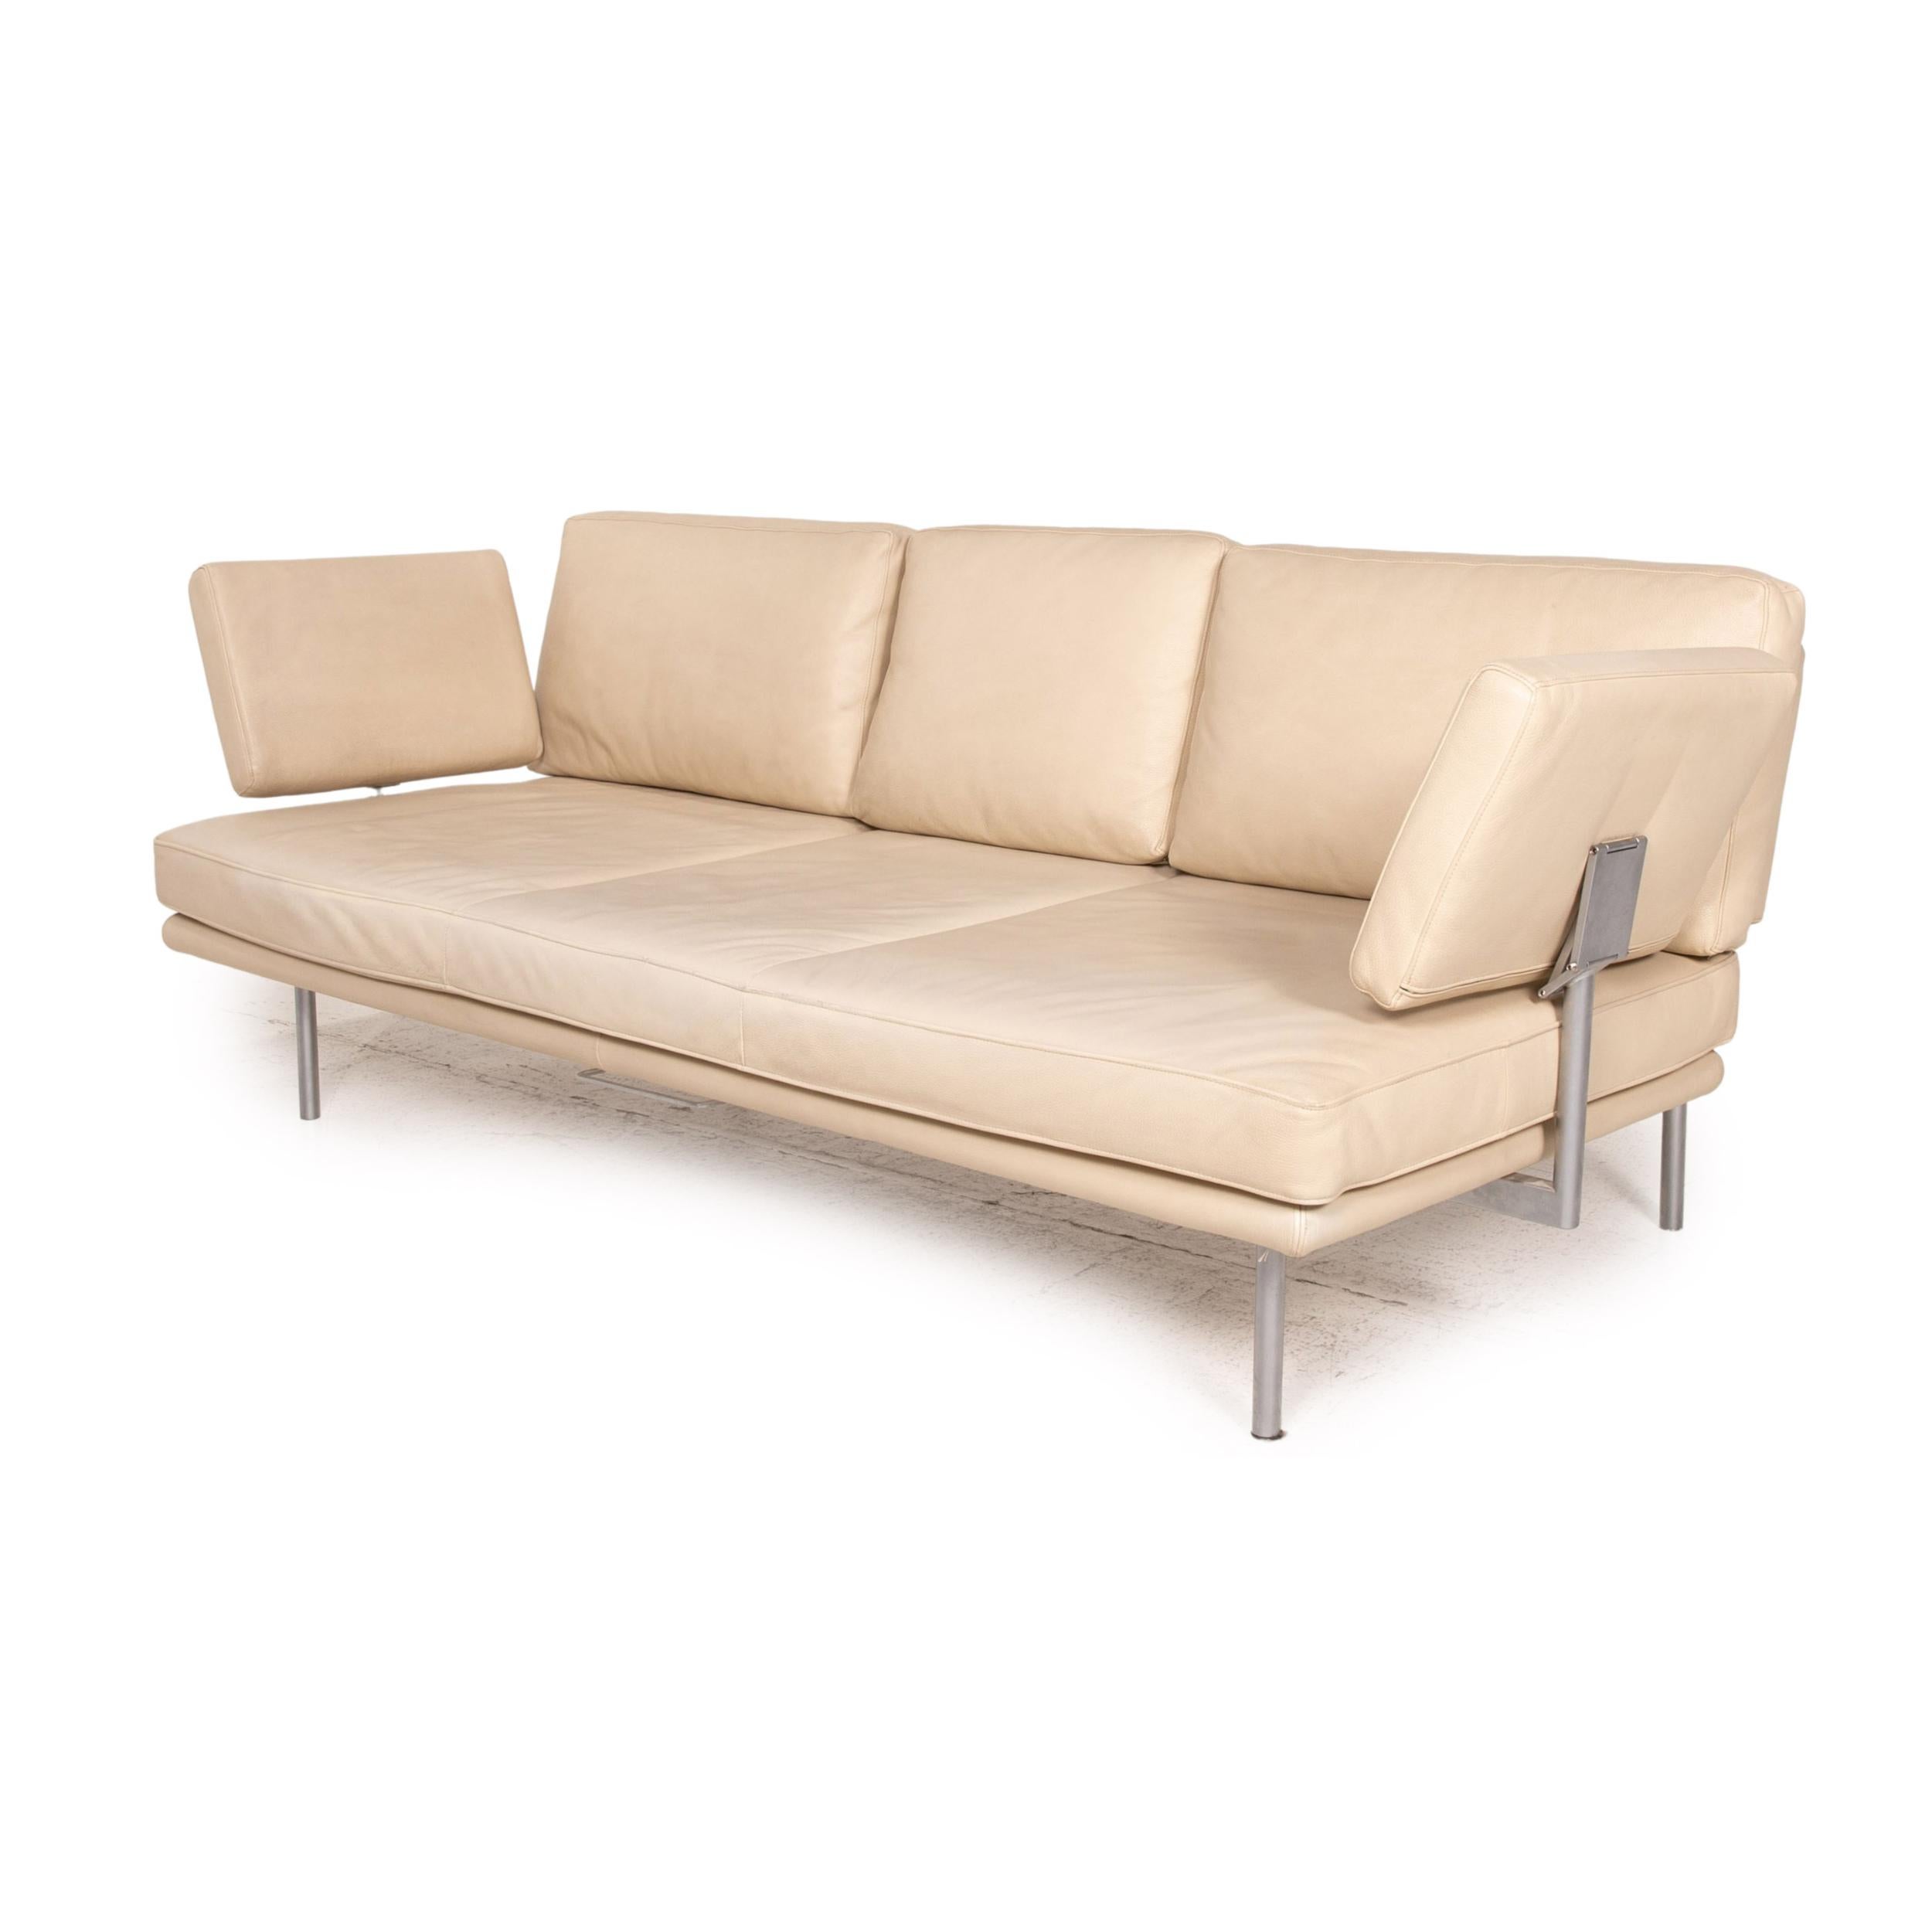 German Walter Knoll Living Platform Leather Sofa Set Beige 1x Three-Seater 1x Stool